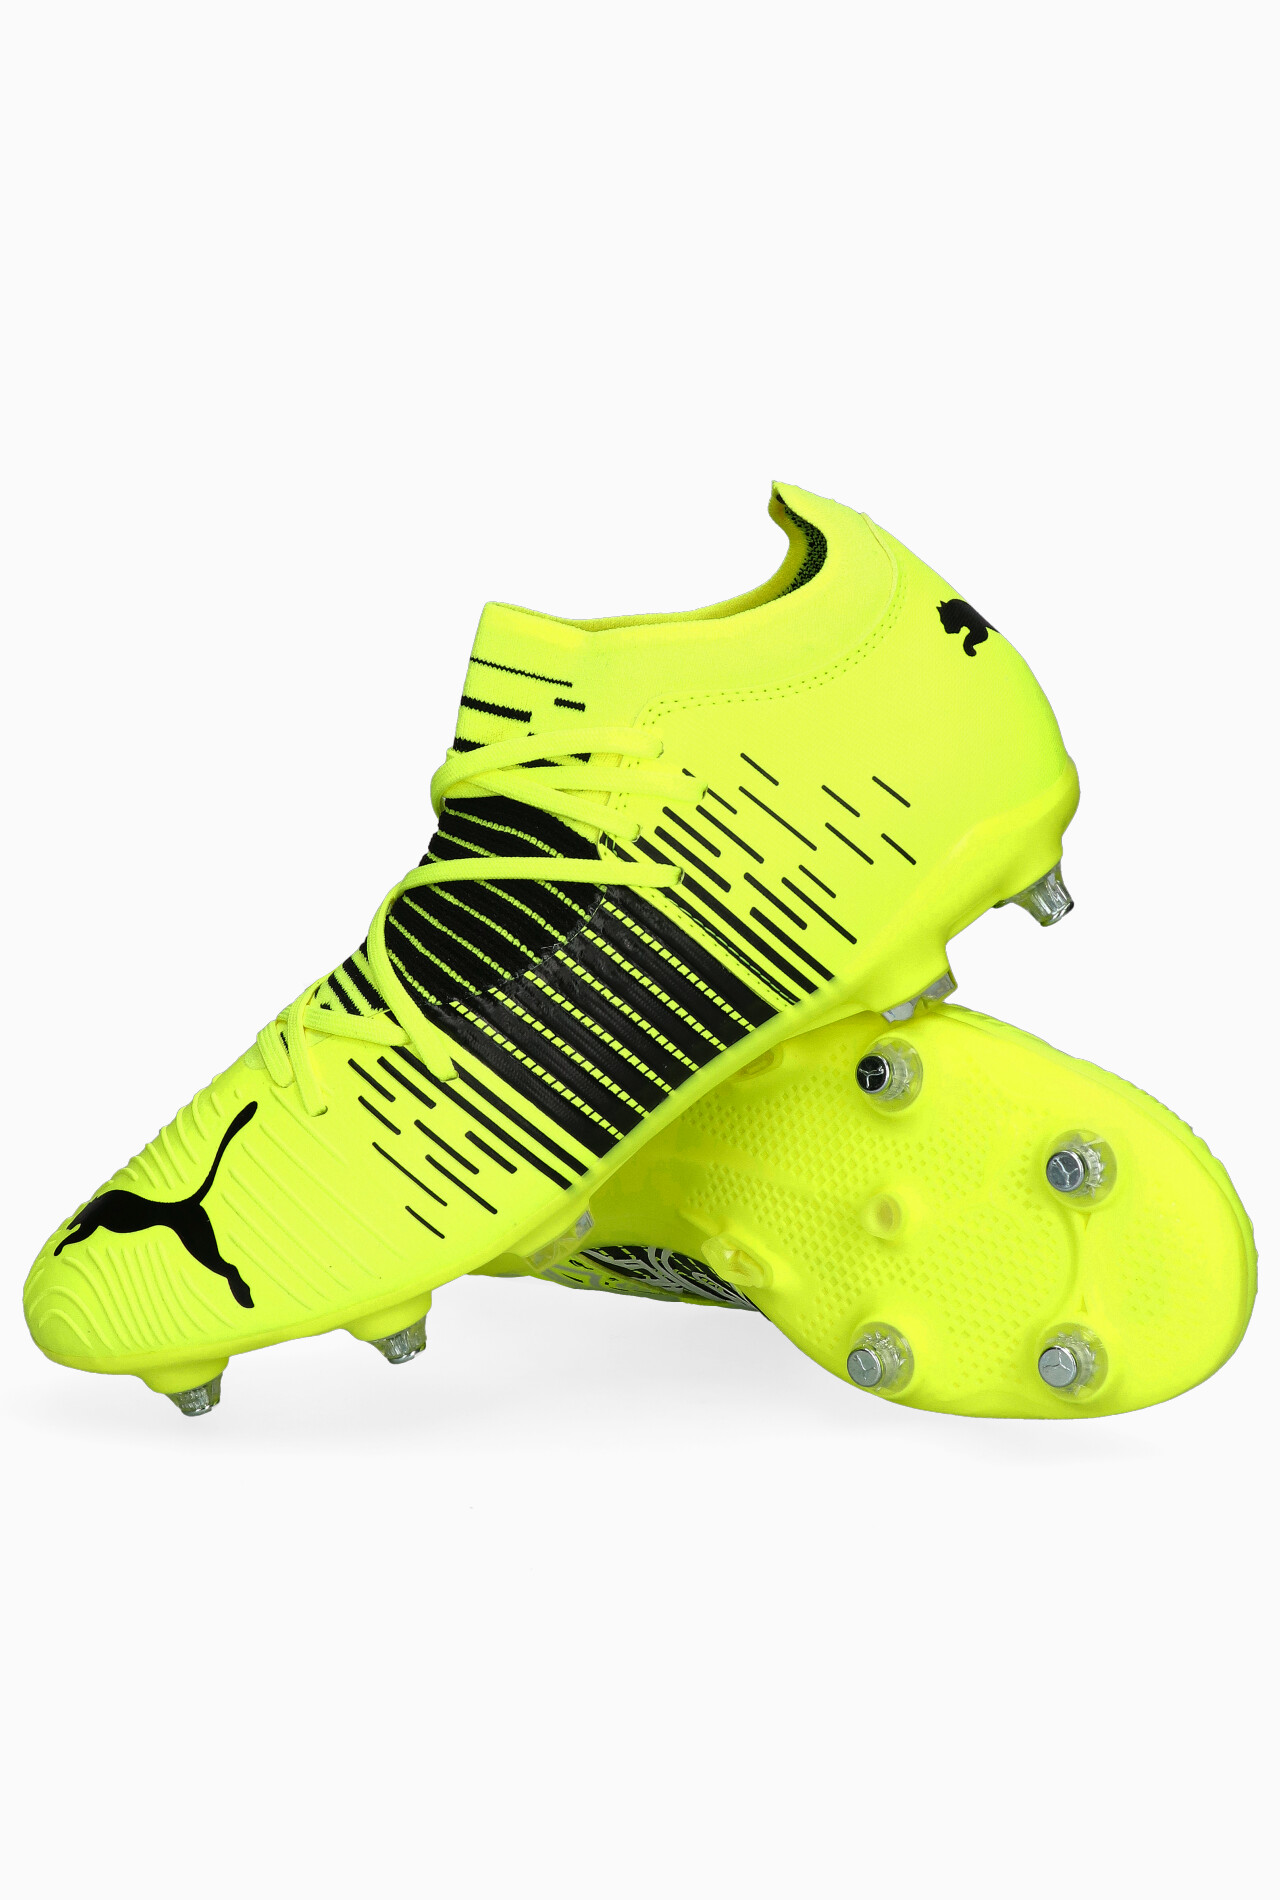 Puma Future Z 3 1 Mxsg R Gol Com Football Boots Equipment